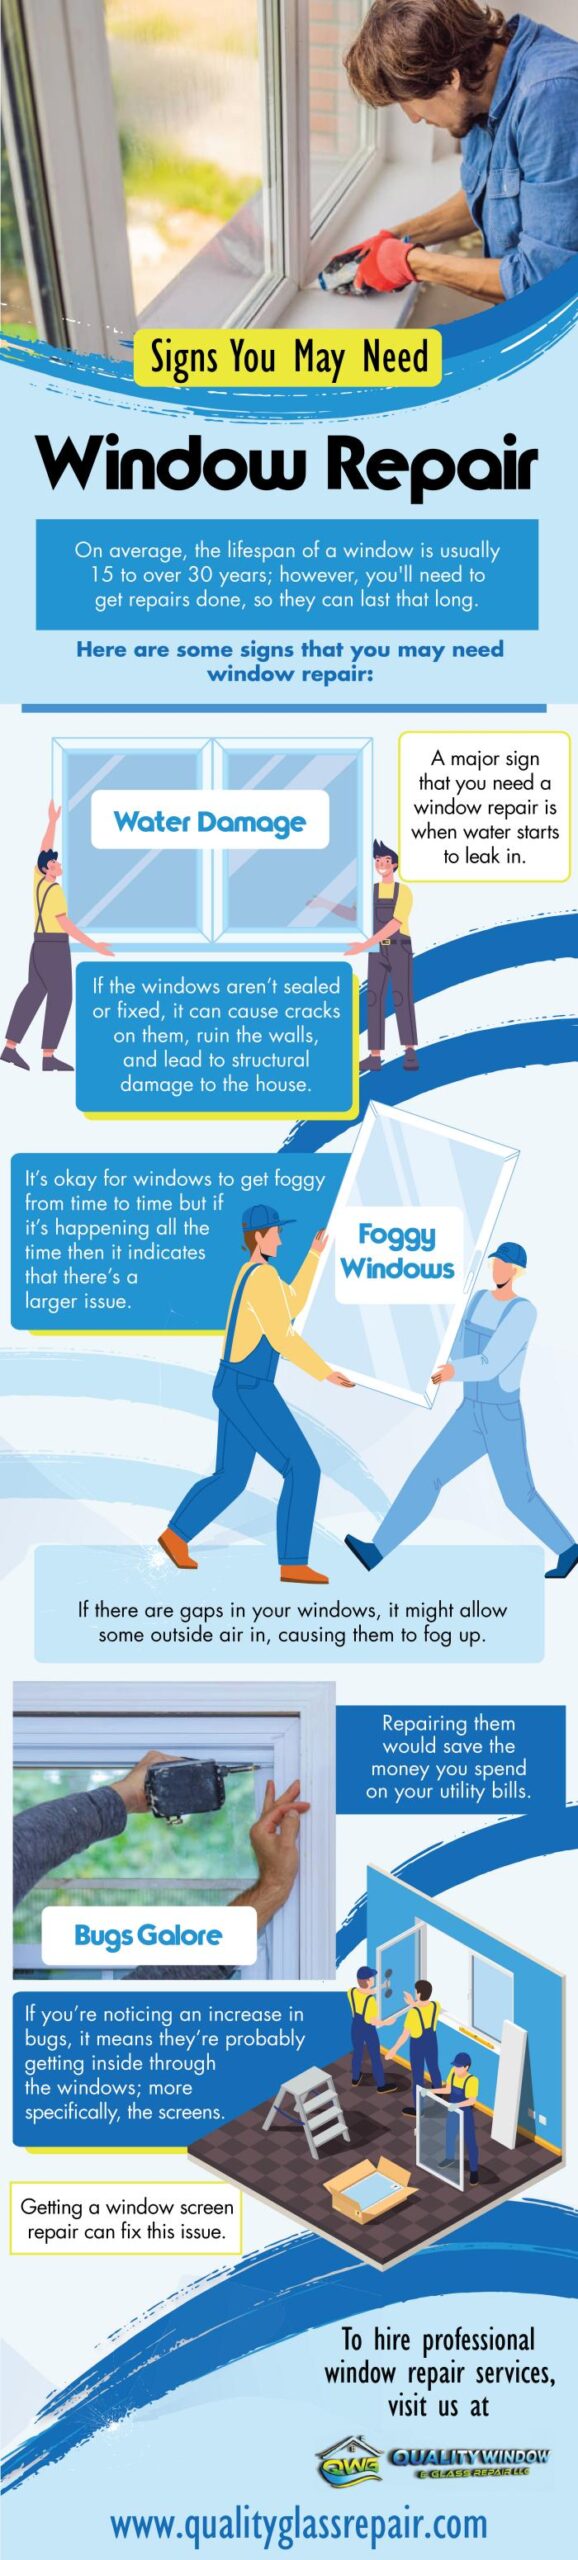 Signs You May Need Window Repair